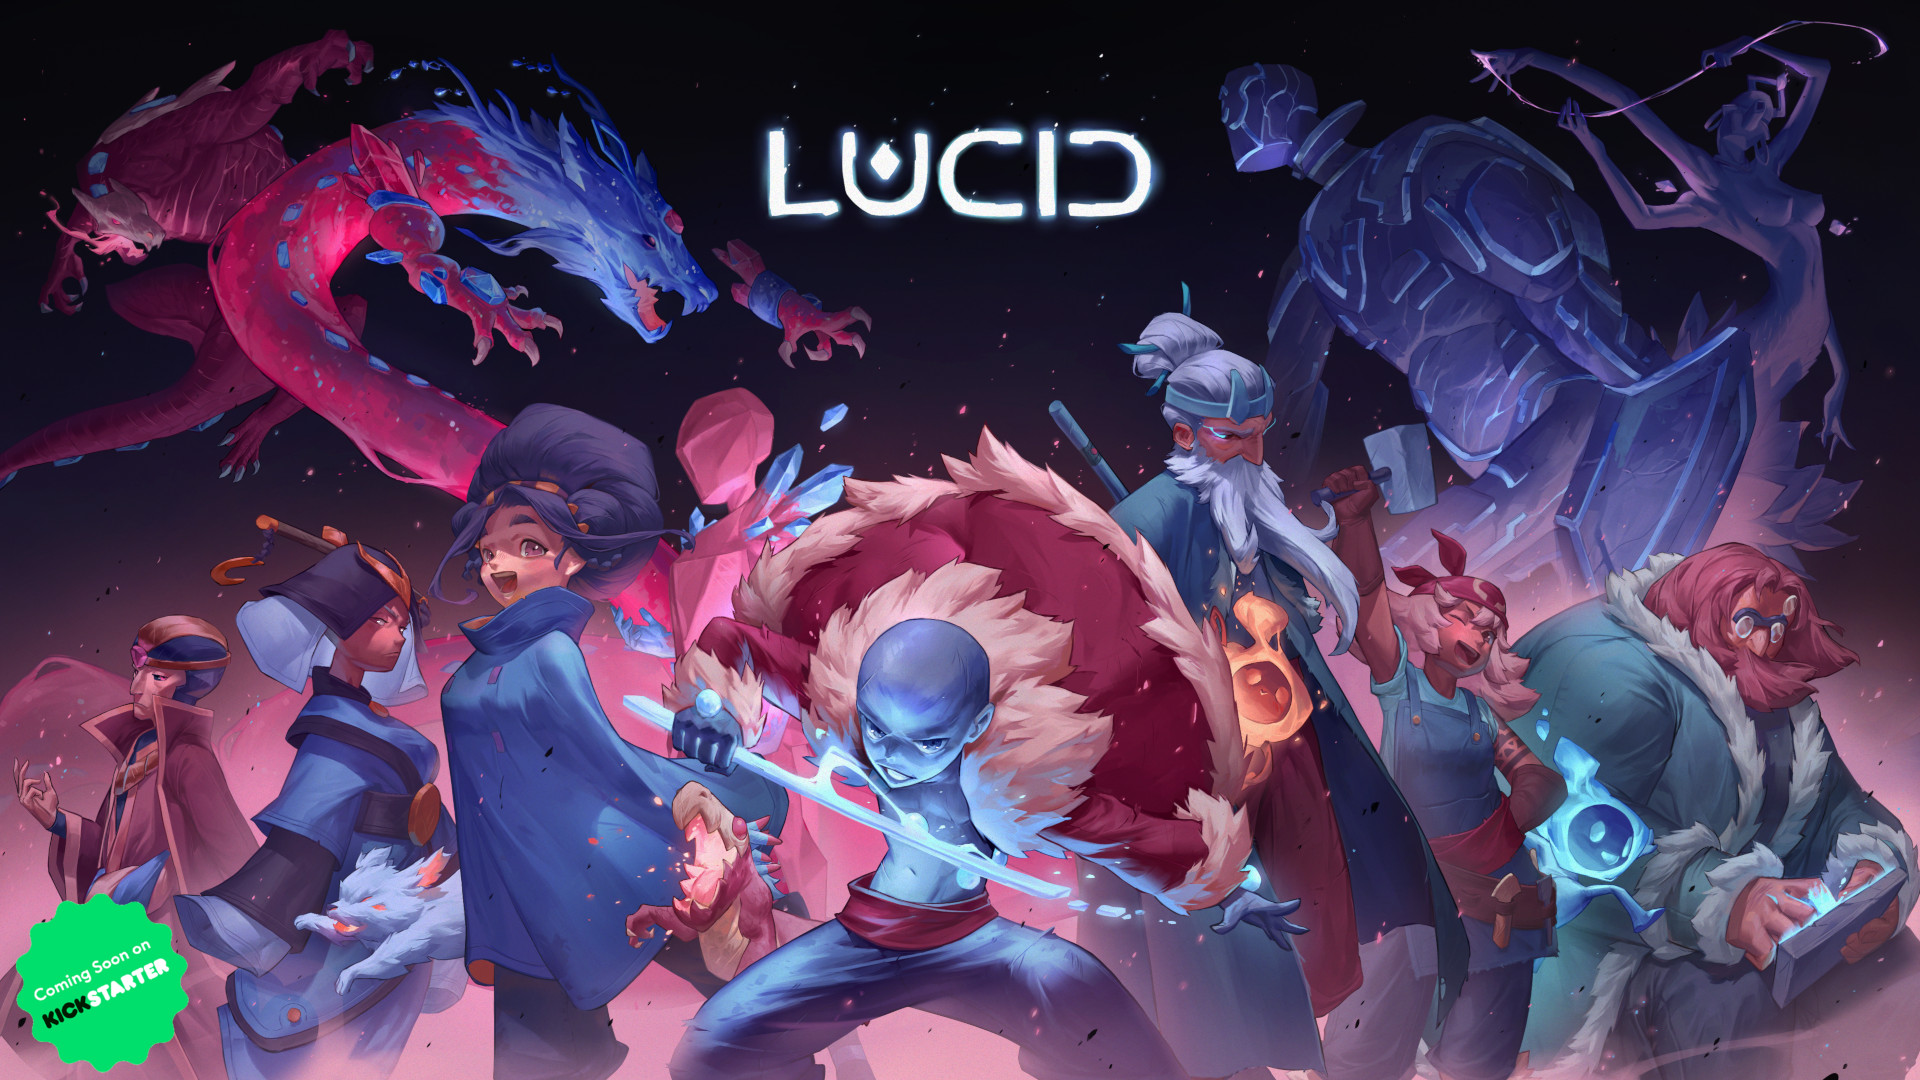 Lucid is set to launch on Kickstarter!